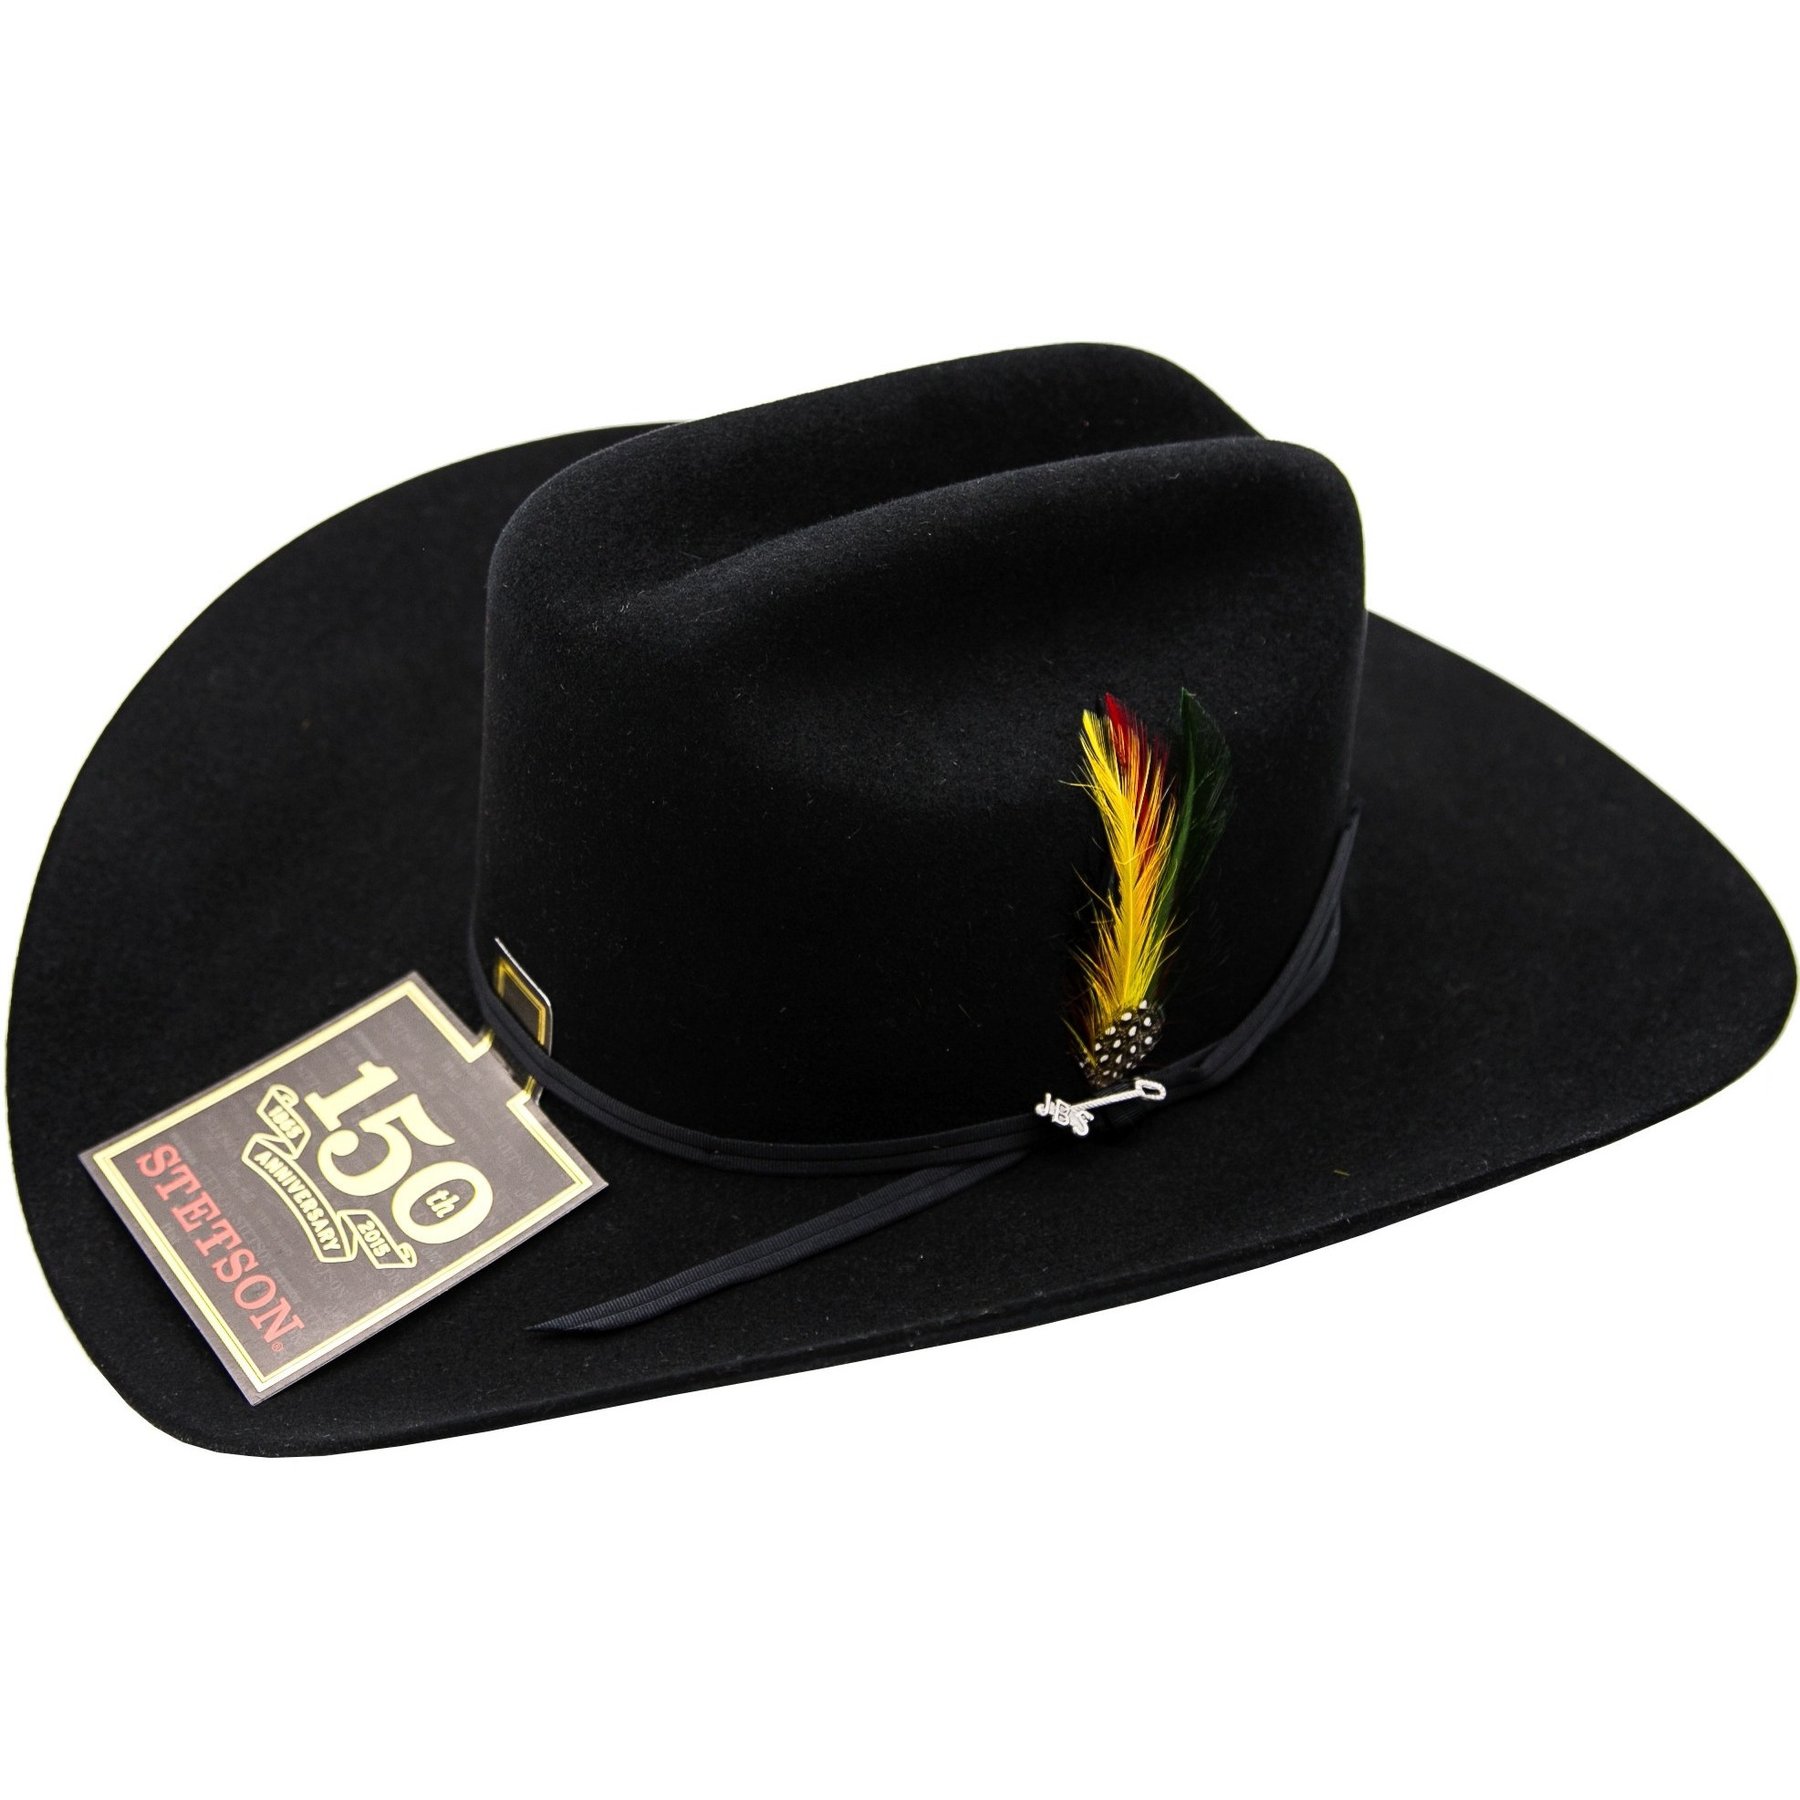 Stetson 6x Hat Spartan Black Fur Felt Cowboy Hat On Sale Made In The ...